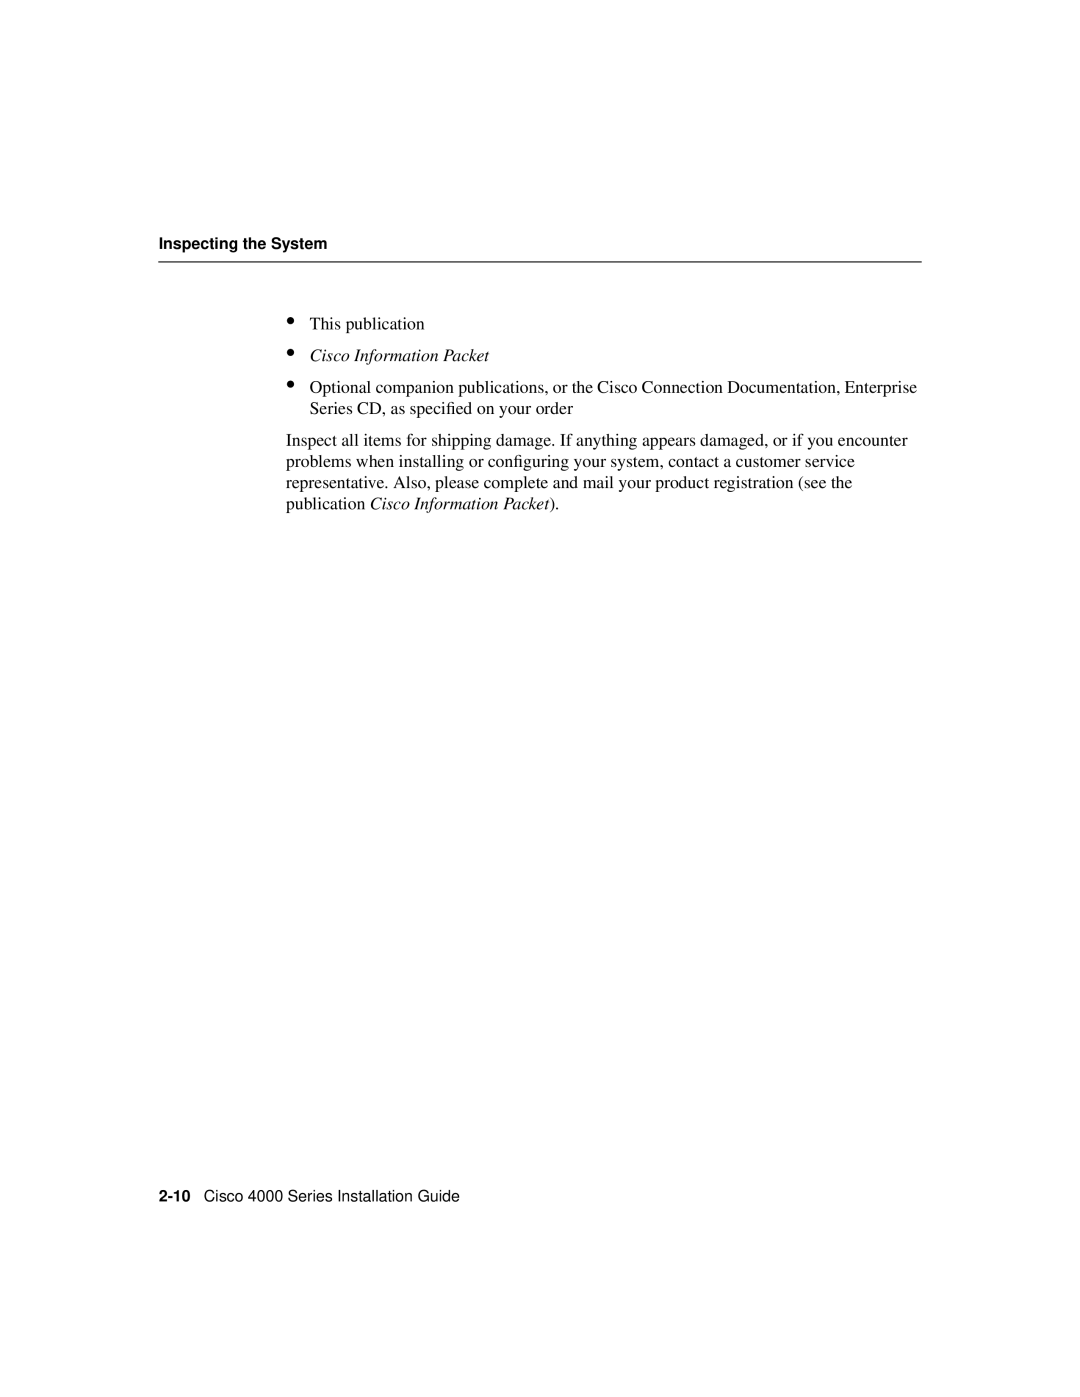 Cisco Systems 4000 appendix This publication, Cisco Information Packet 